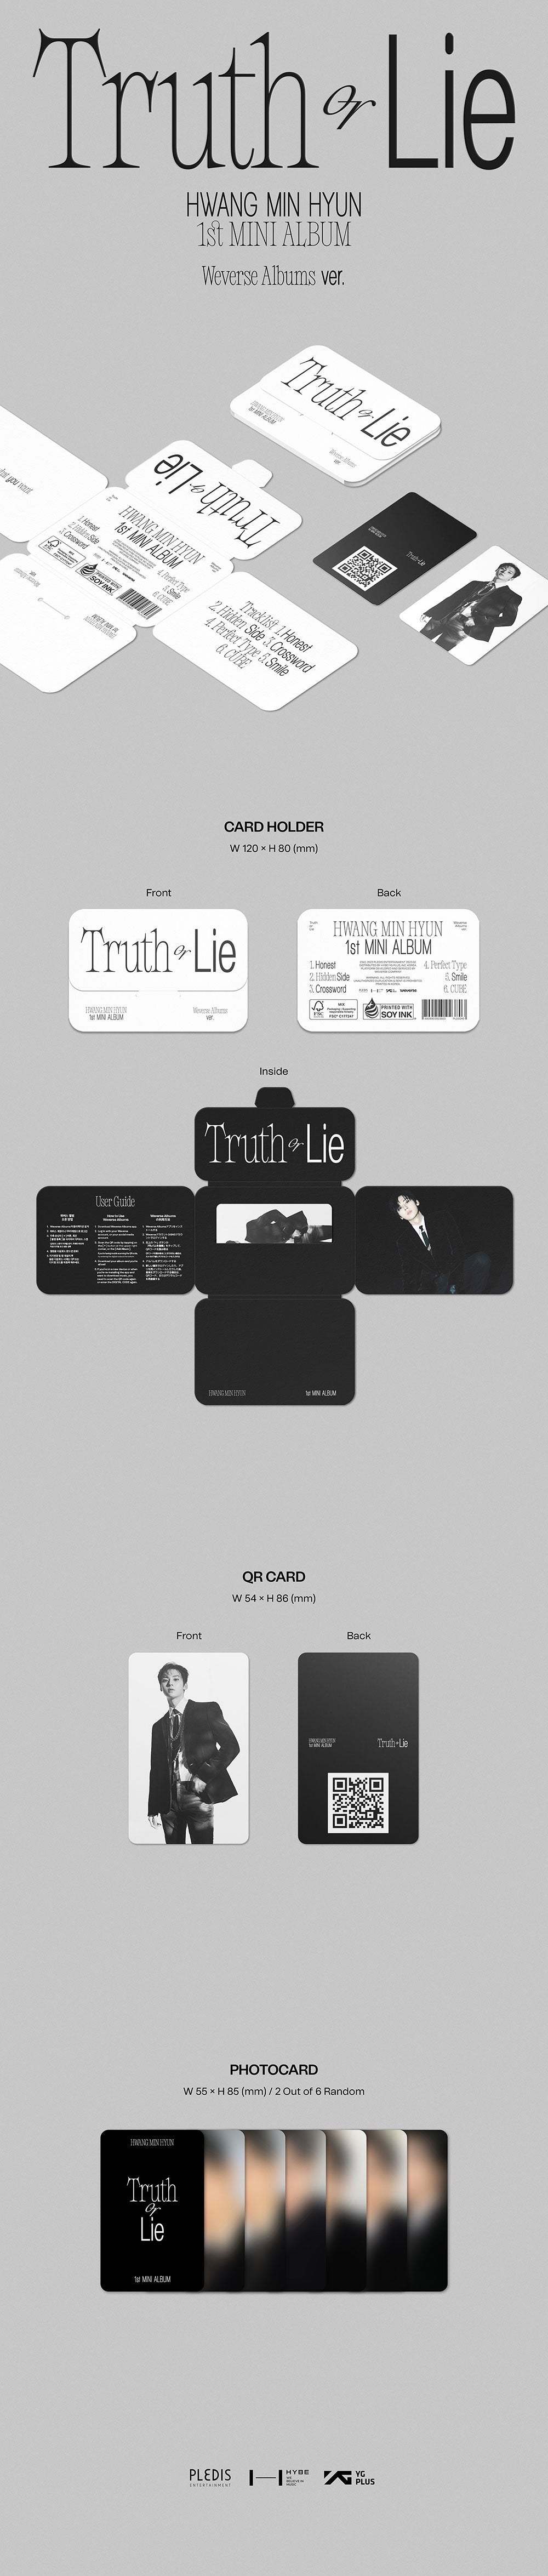 Hwang Min Hyun - Truth أو Lie (1st Mini Album) Weverse Album Ver.